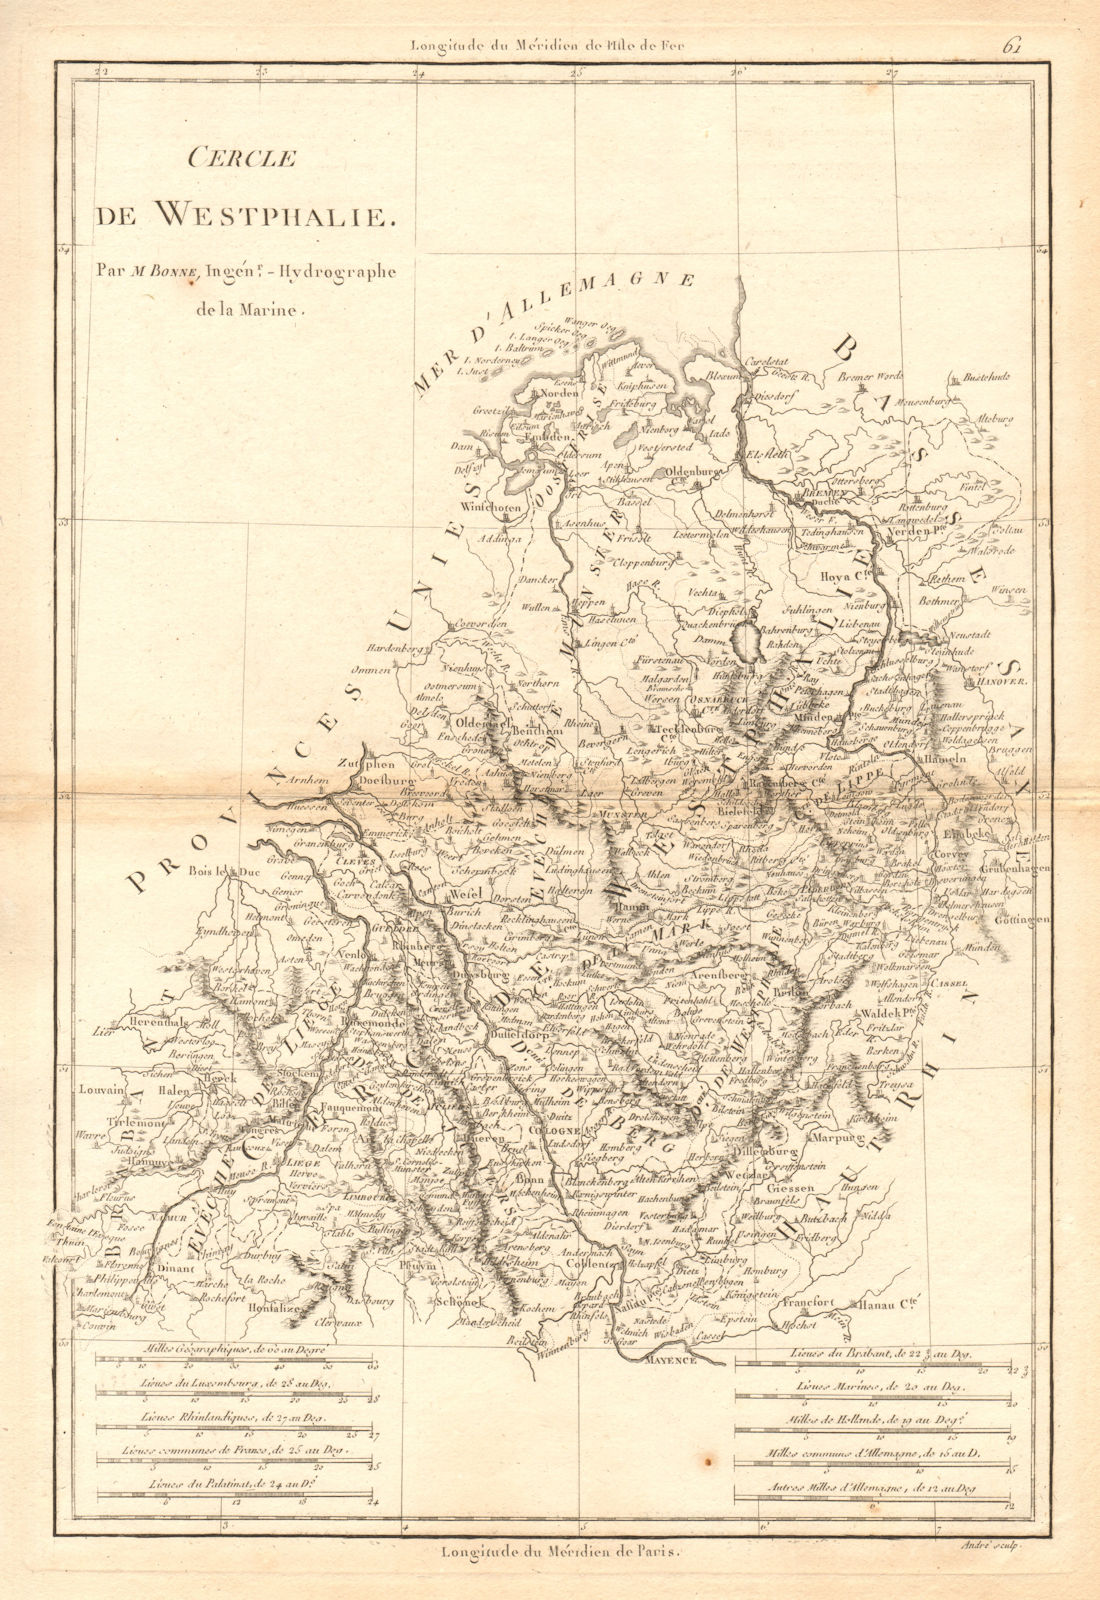 Associate Product Cercle de Westphalie. Circle of Westphalia. North-west Germany. BONNE 1787 map